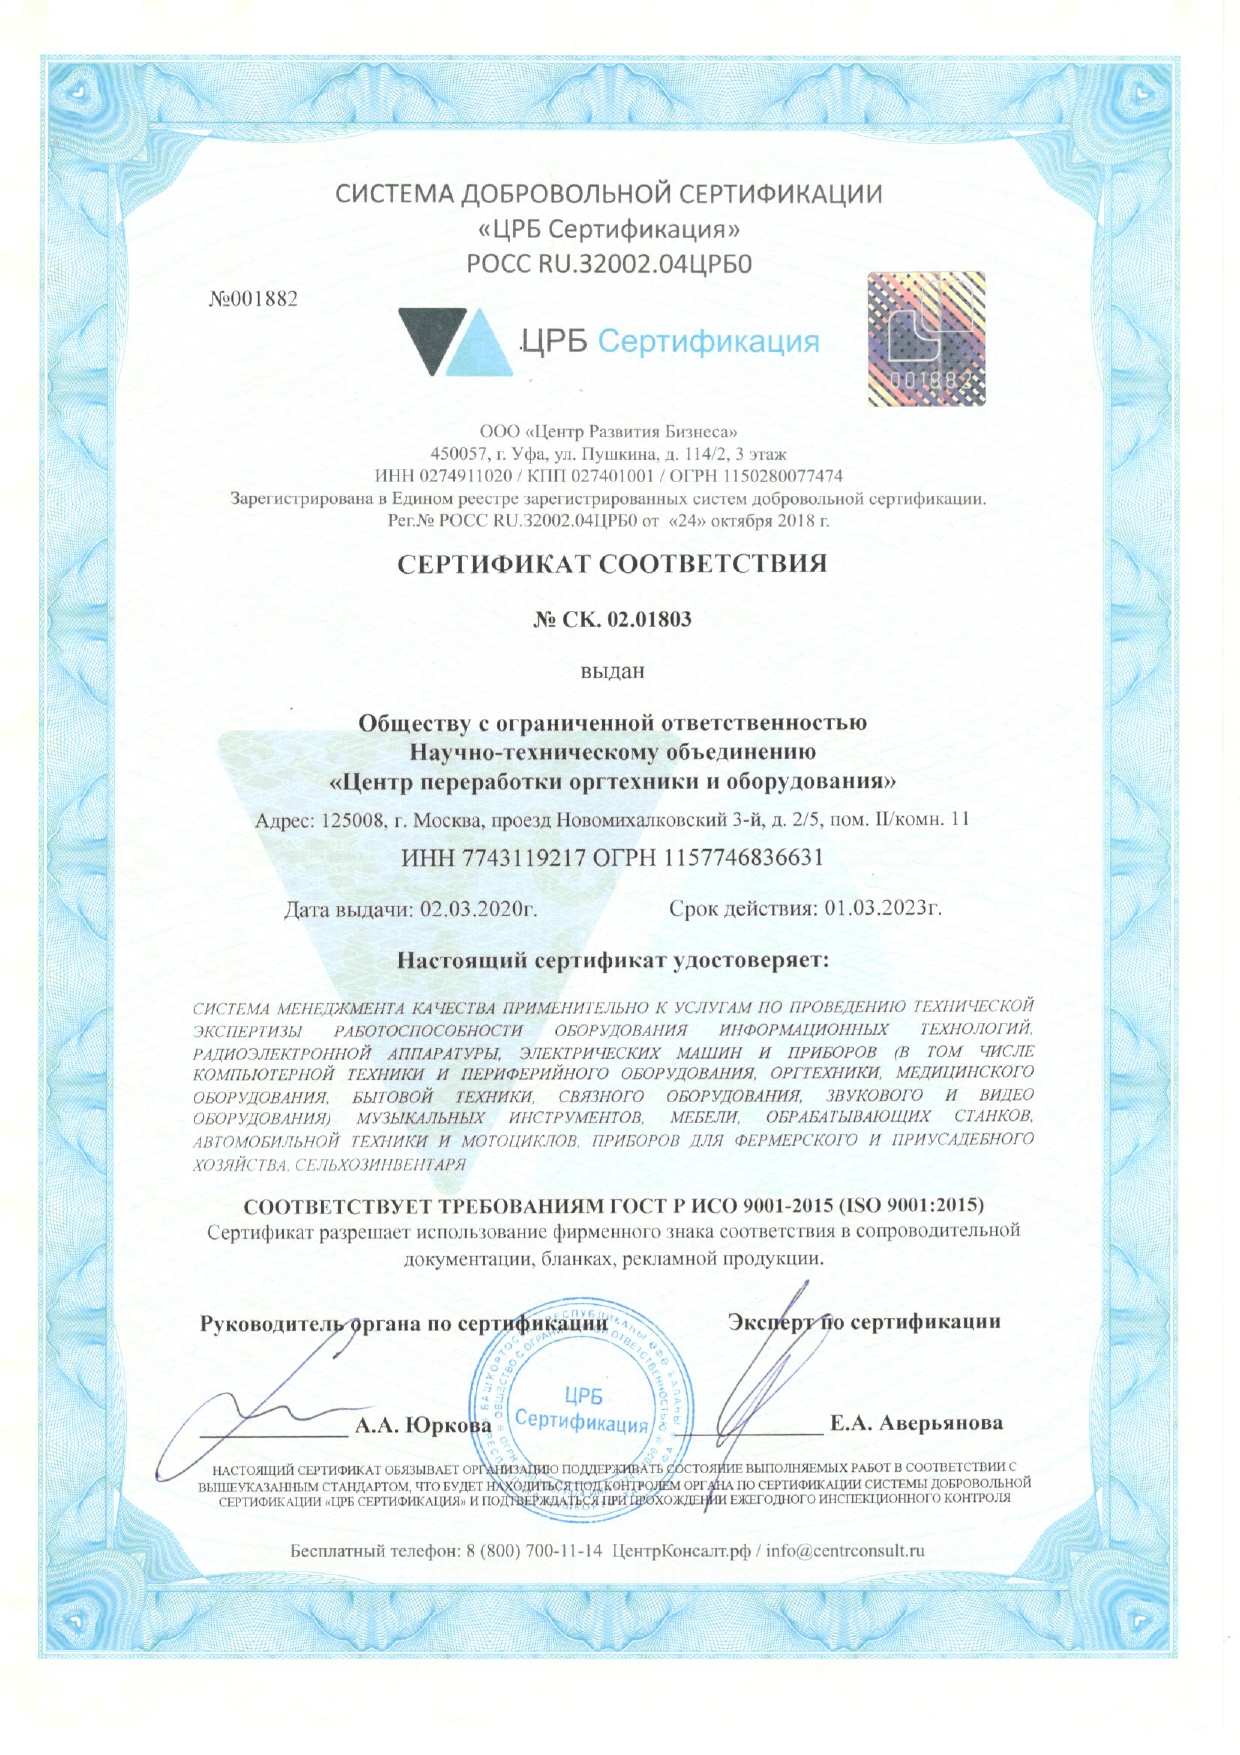 Сертификат ИСО на списание оргтехники